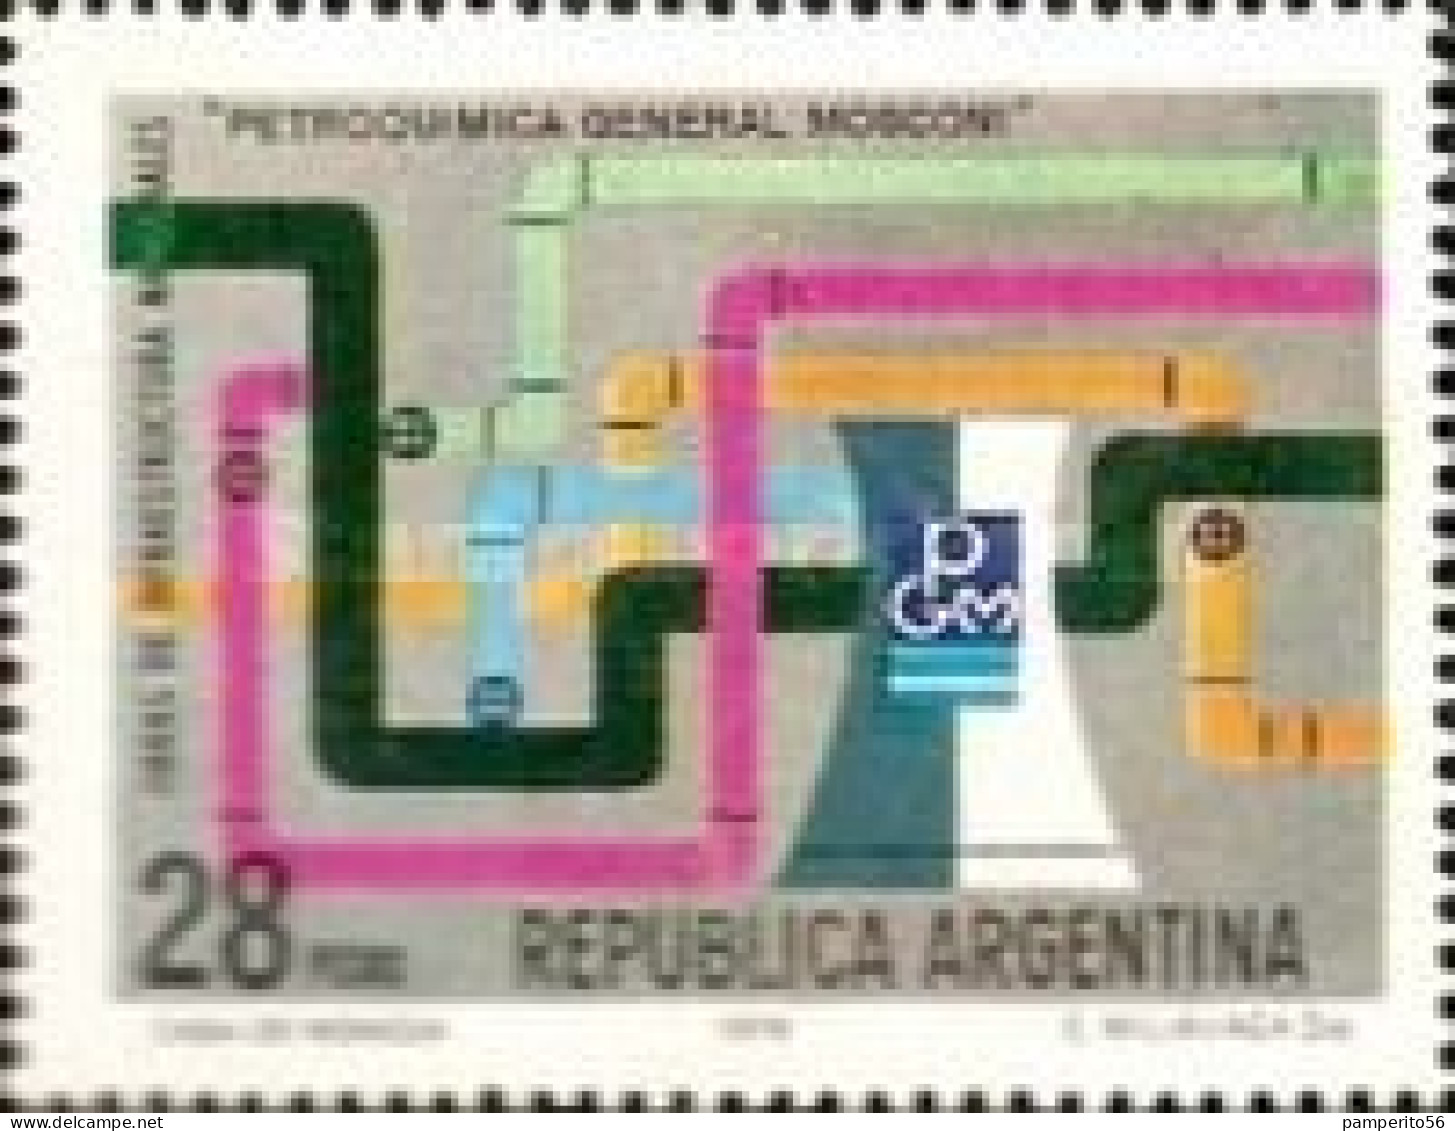 ARGENTINA - AÑO 1976 - Infraestructuras.- Industria Petroquímica PGM - Used Stamps